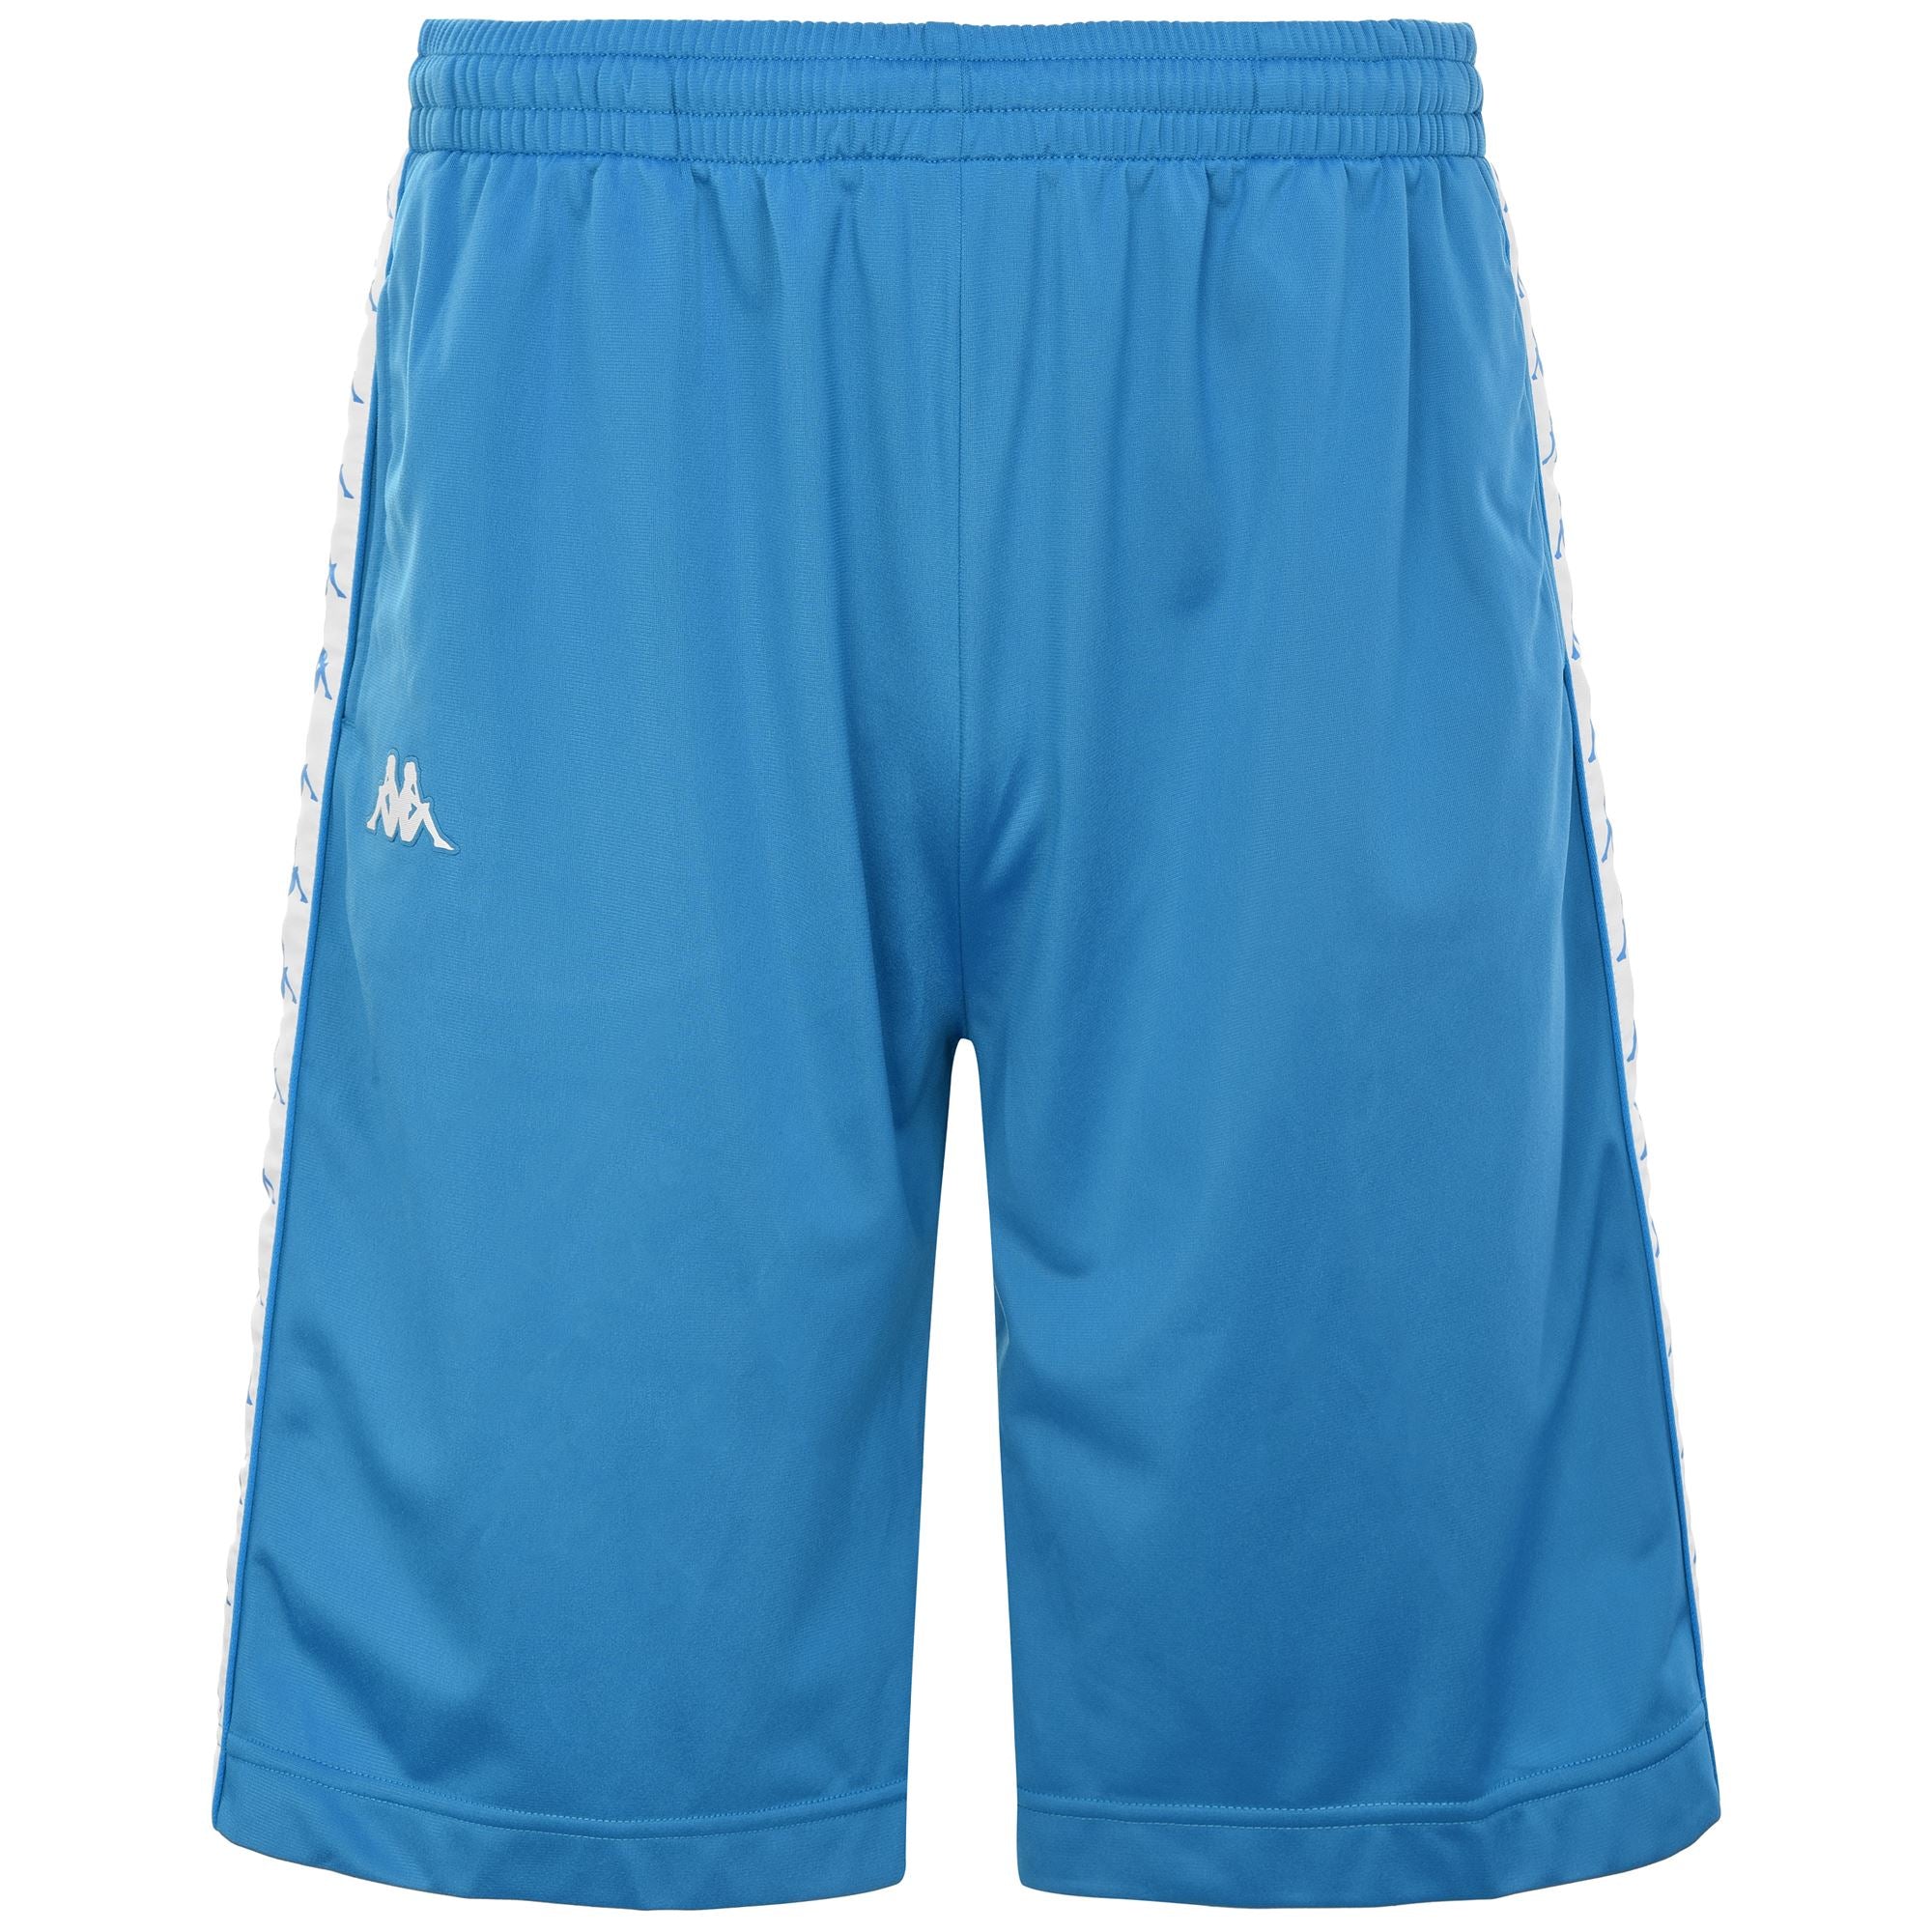 222 BANDA TREADWELLZ - Shorts - Sport Shorts - Man - BLUE SMURF-WHITE